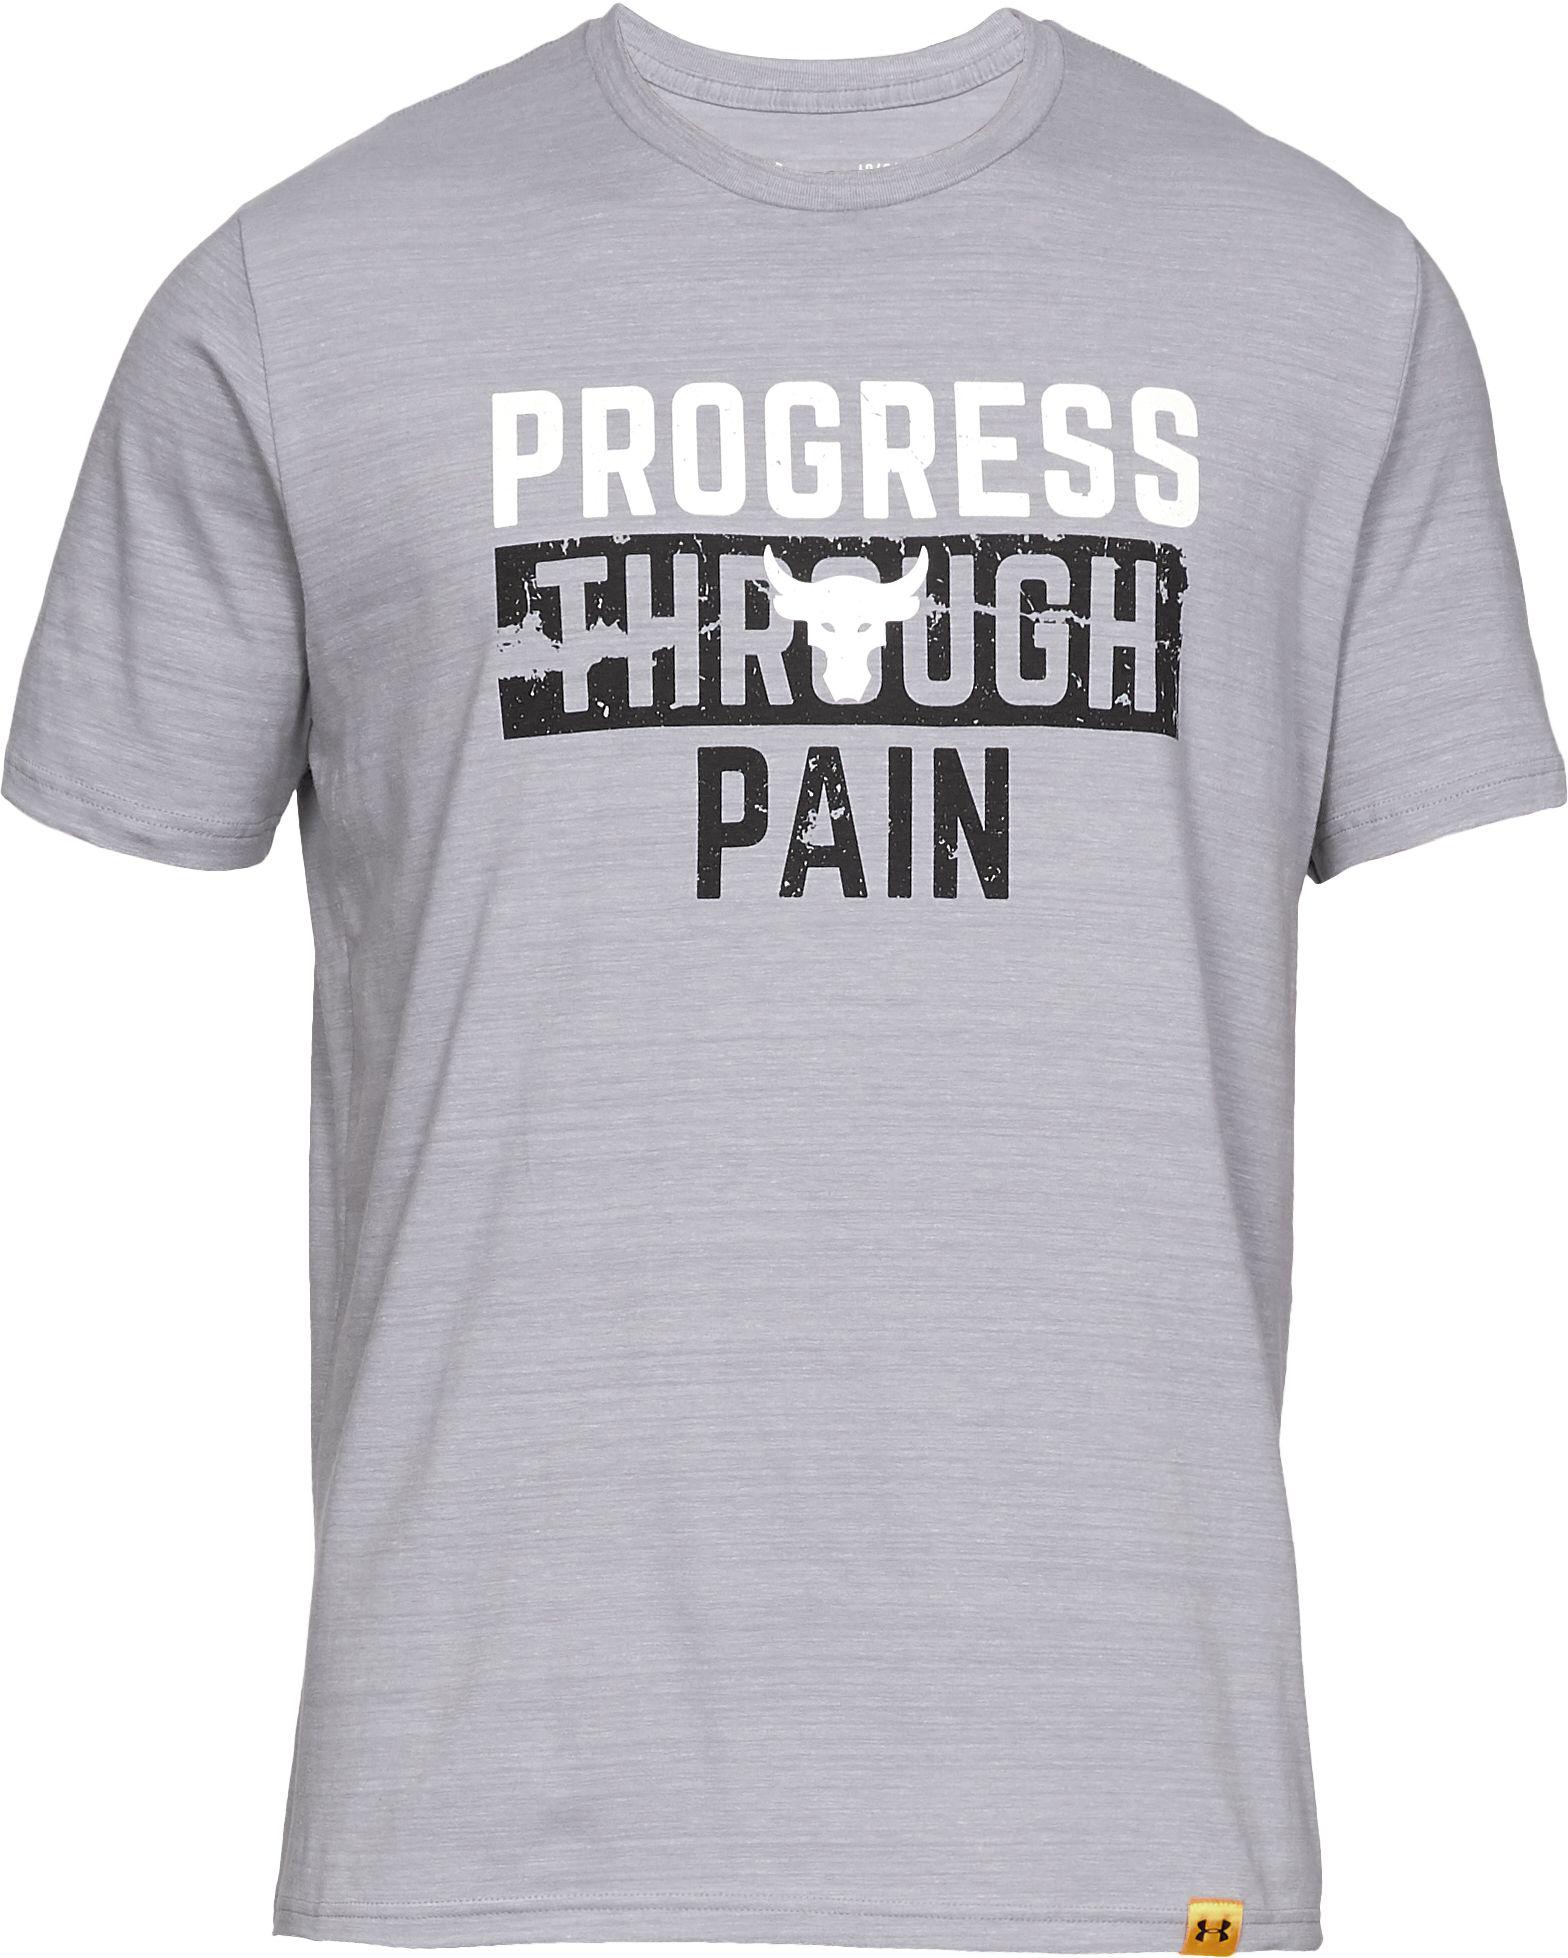 project rock progress through pain